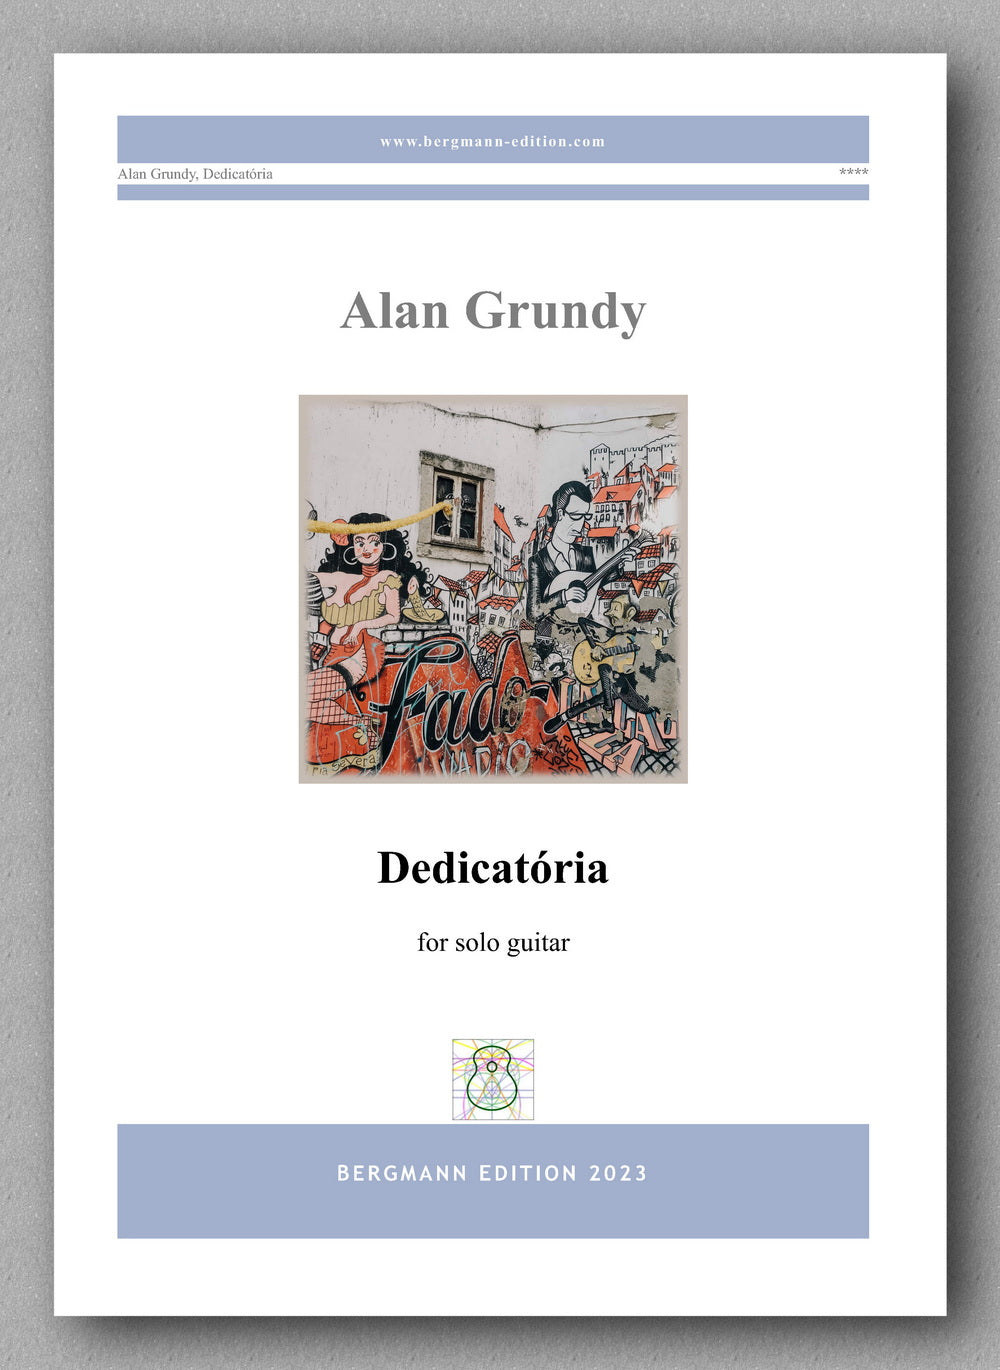 Dedicatória by Alan Grundy - preview of the cover